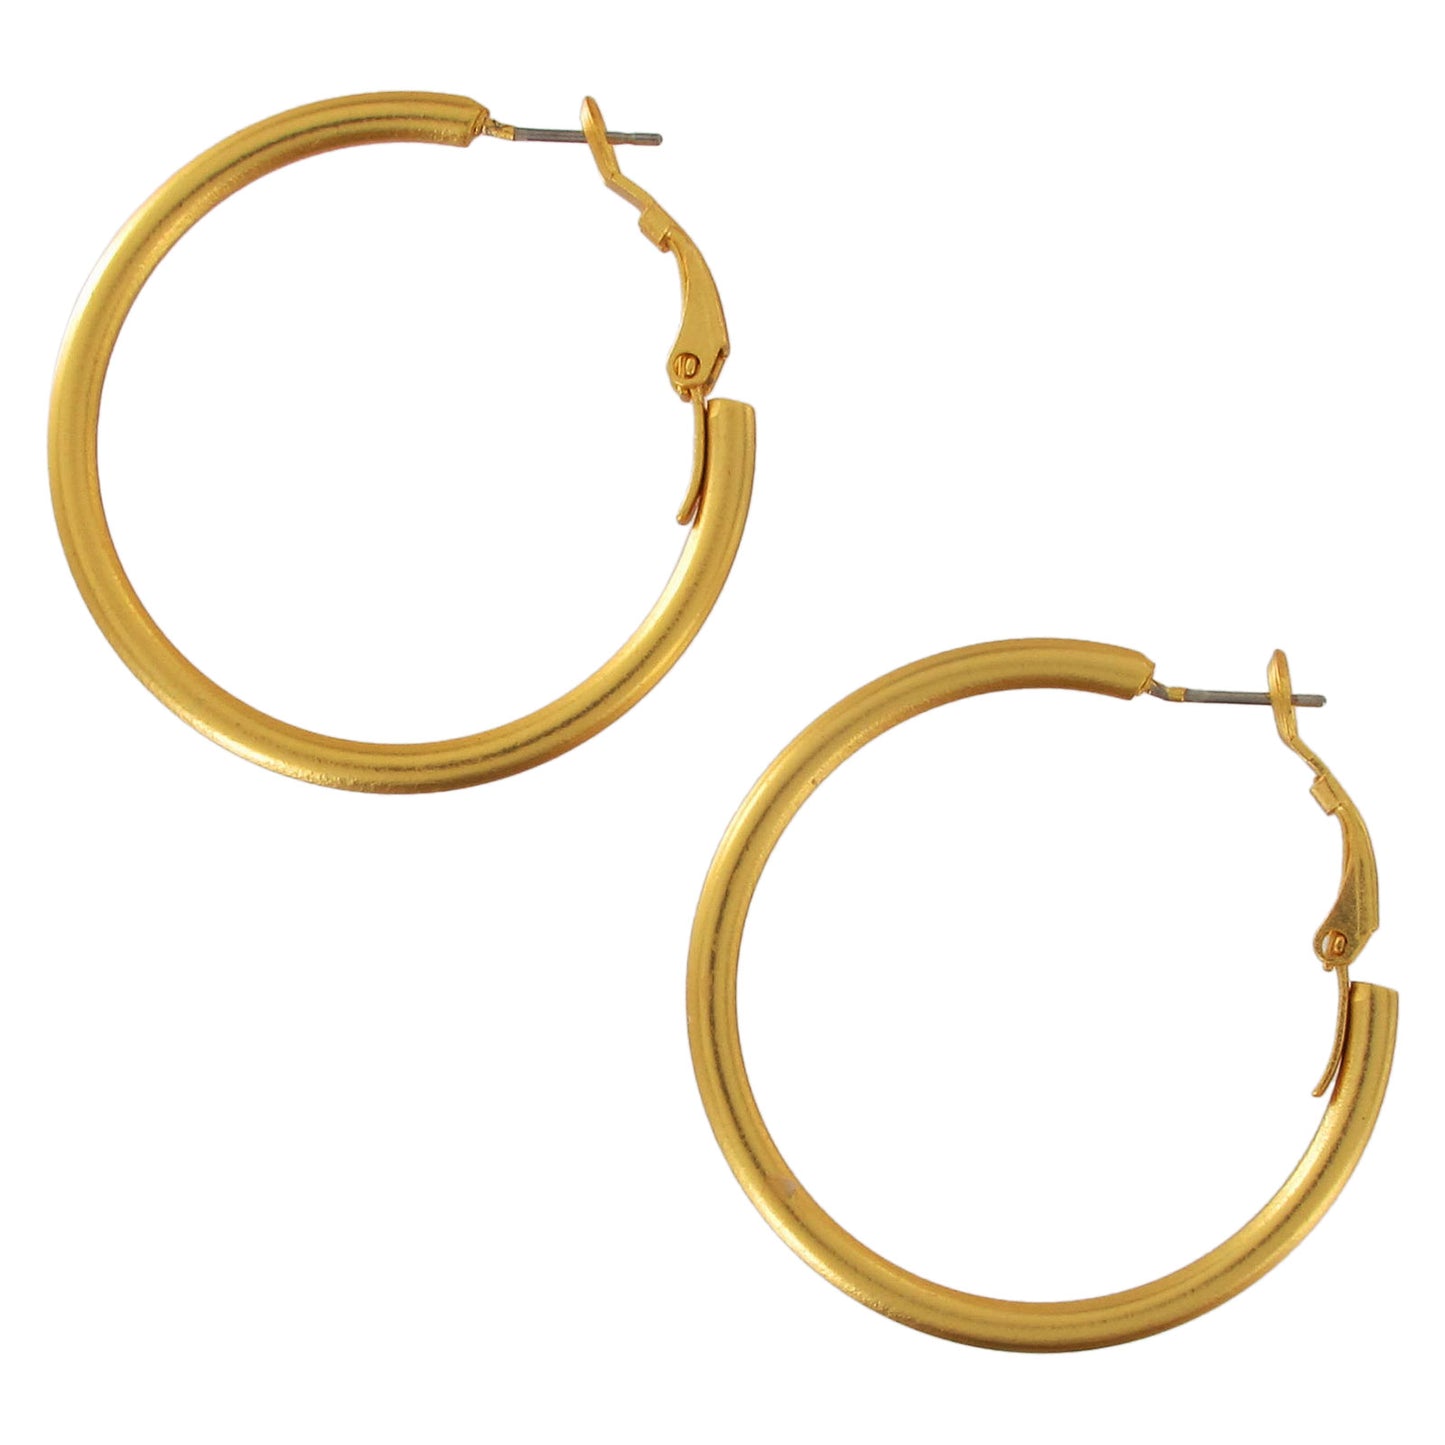 Classic Matte Gold Tone Solid Hoop Earrings For Women Fashion Jewelry 1 3/8"